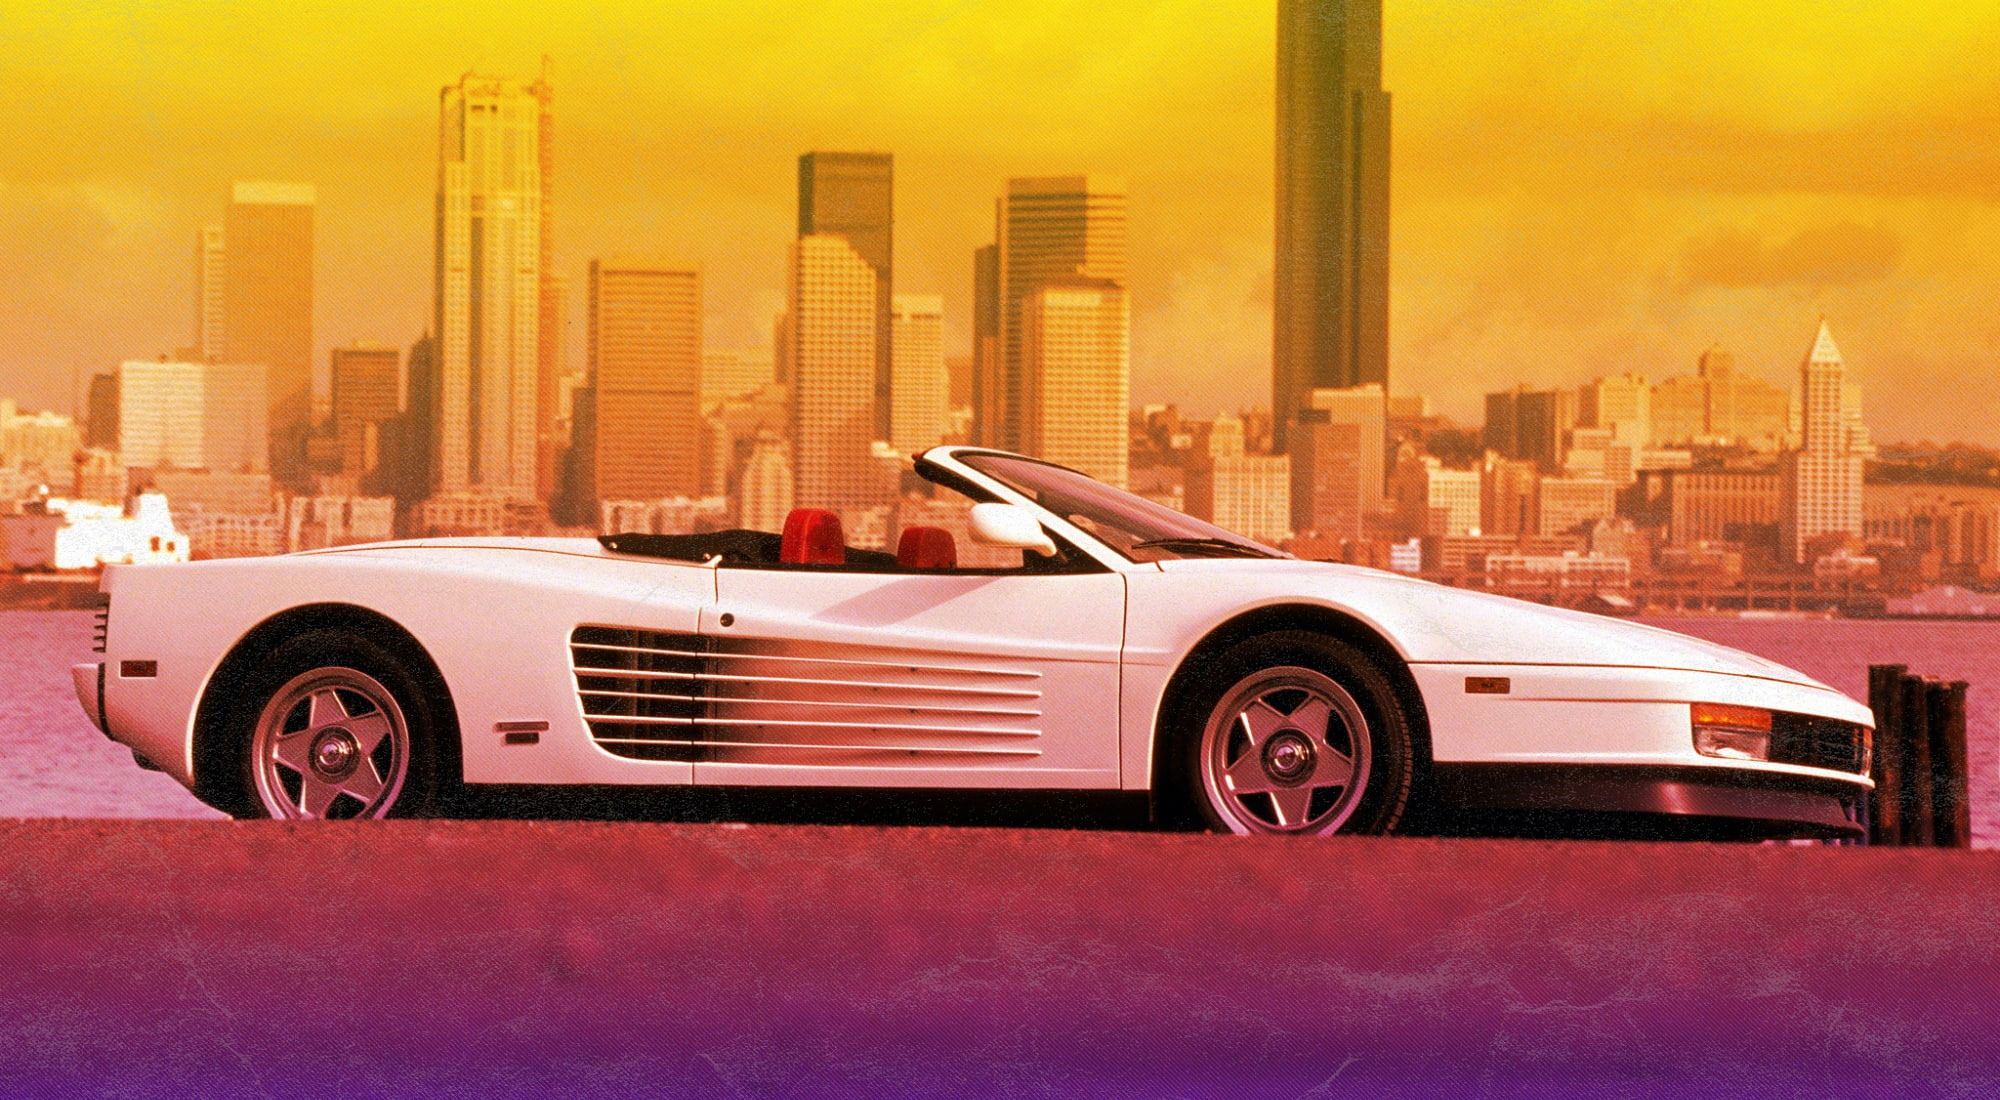 The city wallpaper, Ferrari, 80s, Testarossa, VHS, 80's, Synth, Retrowave